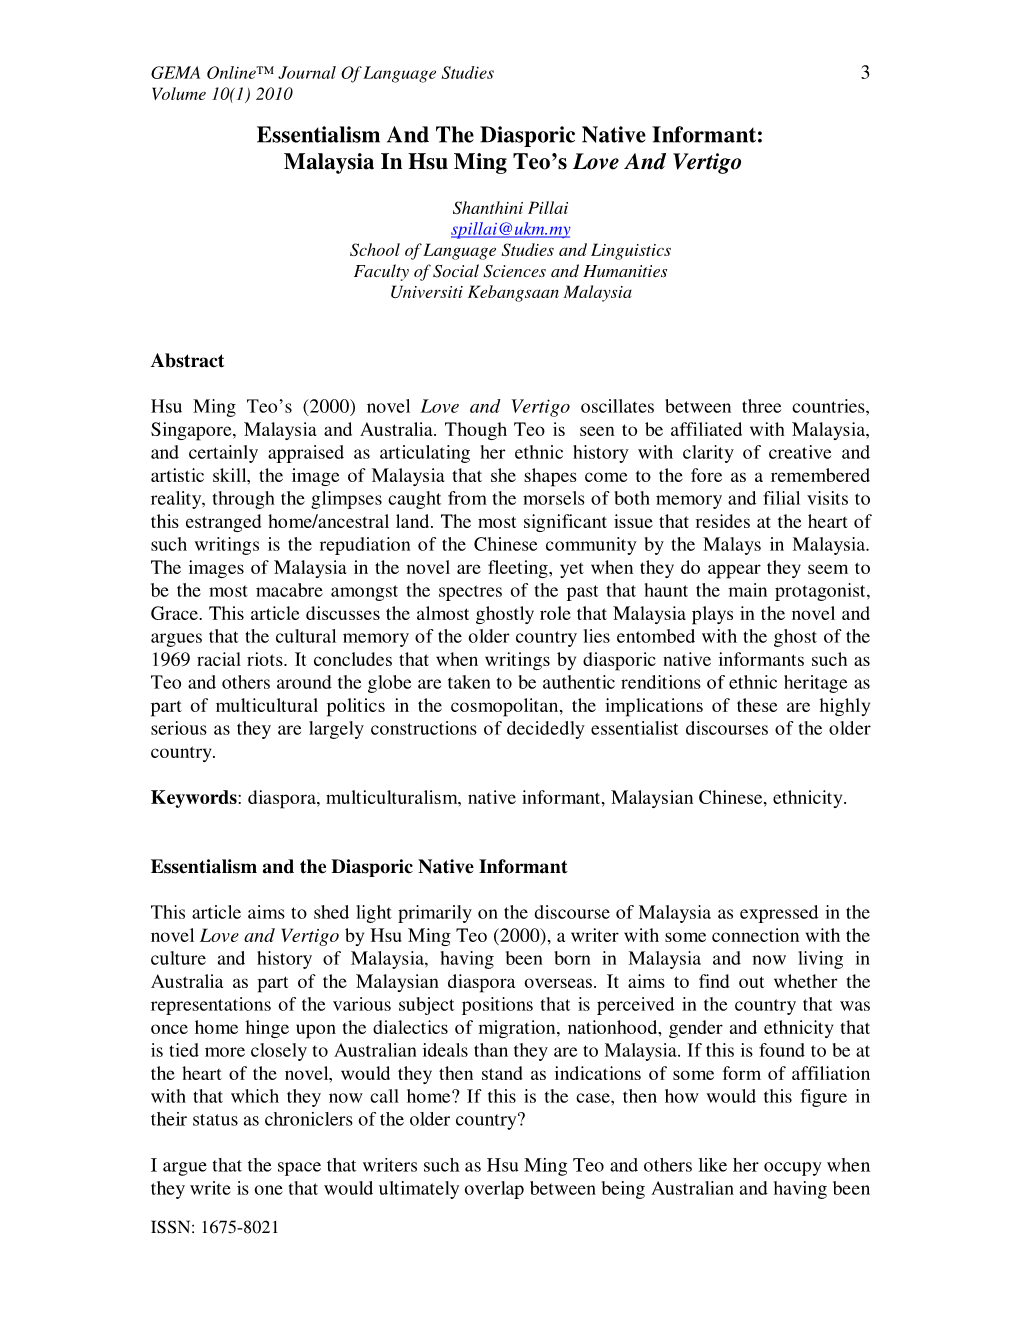 Essentialism and the Diasporic Native Informant: Malaysia in Hsu Ming Teo’S Love and Vertigo